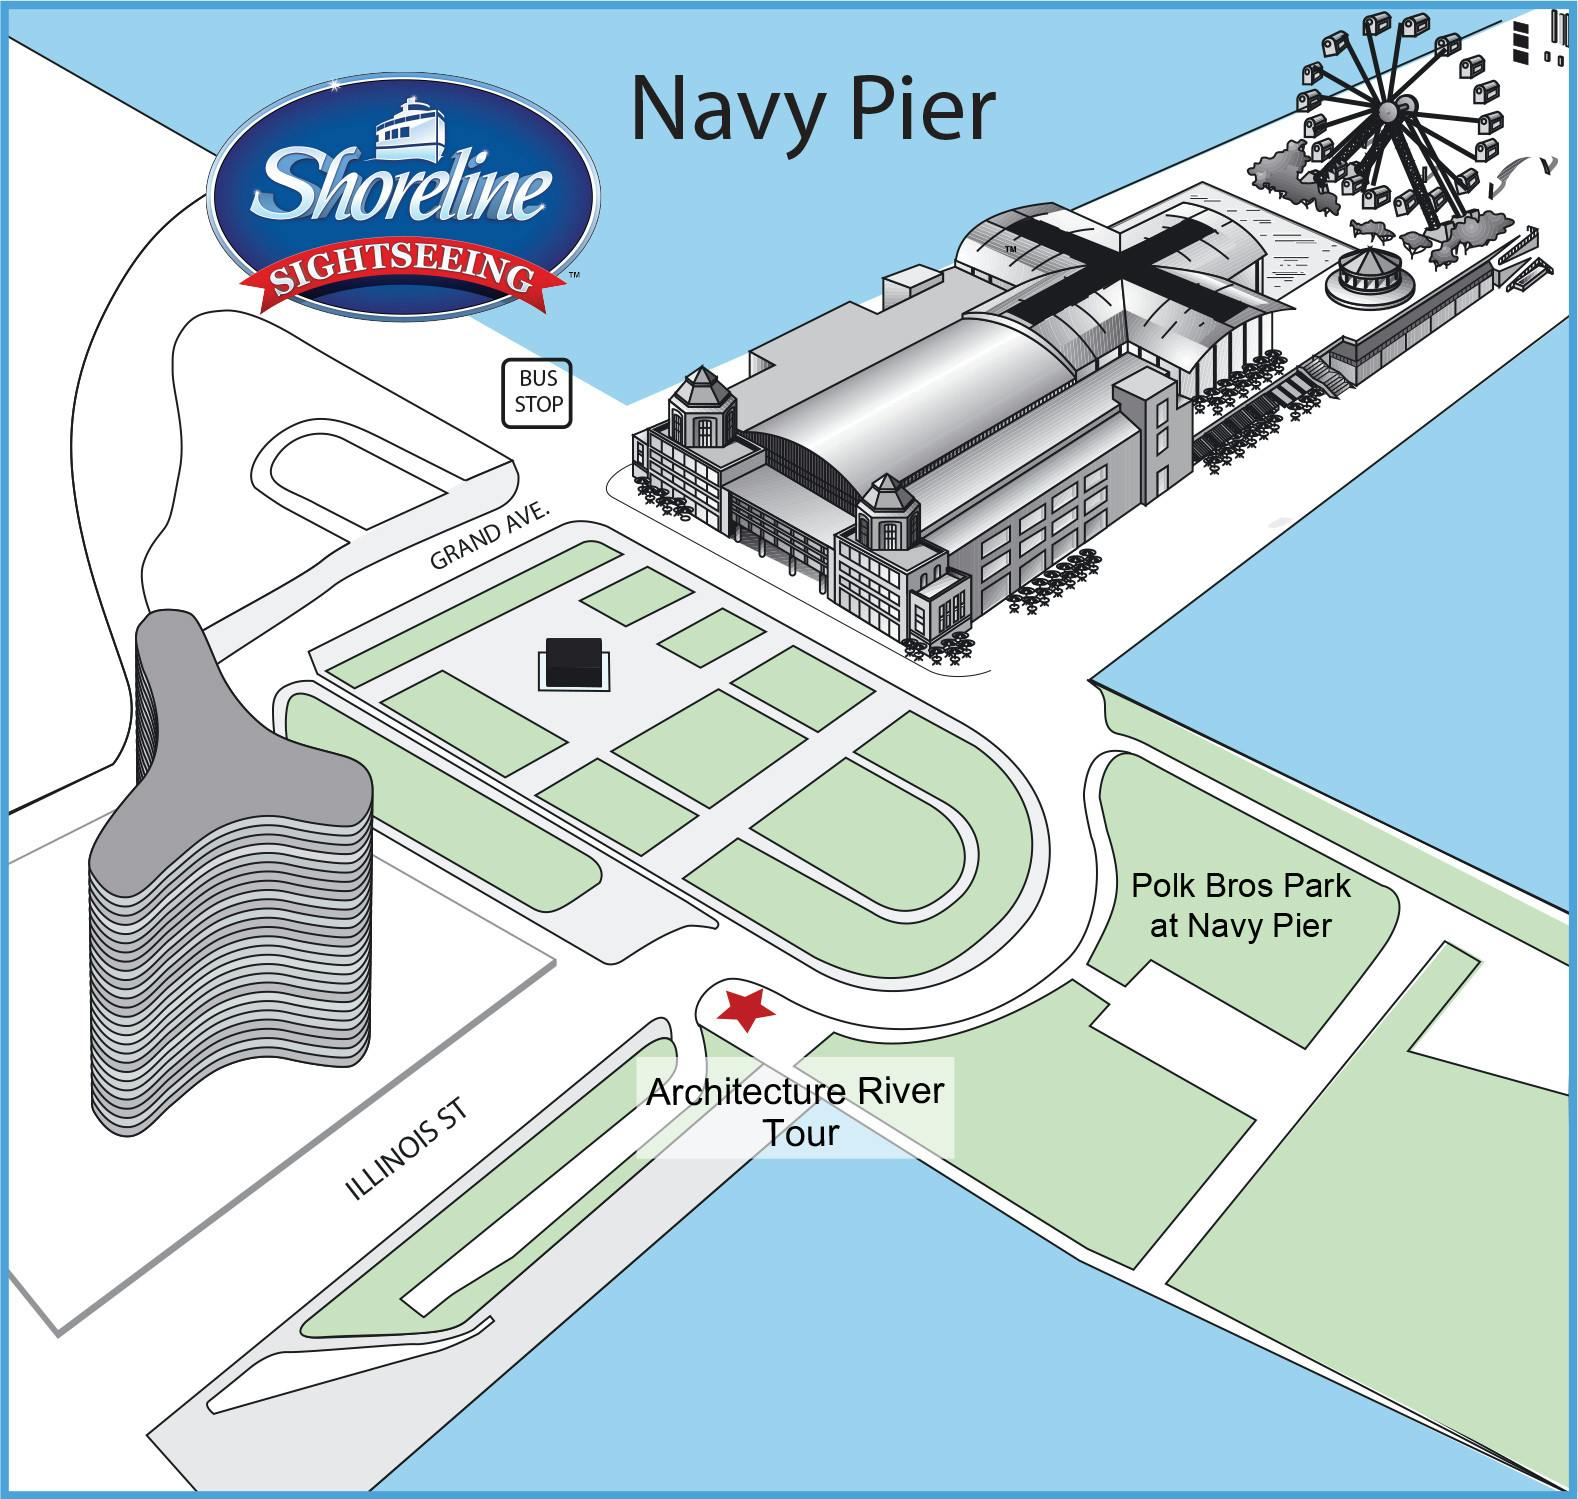 Navy Pier Architecture River Tour.jpg